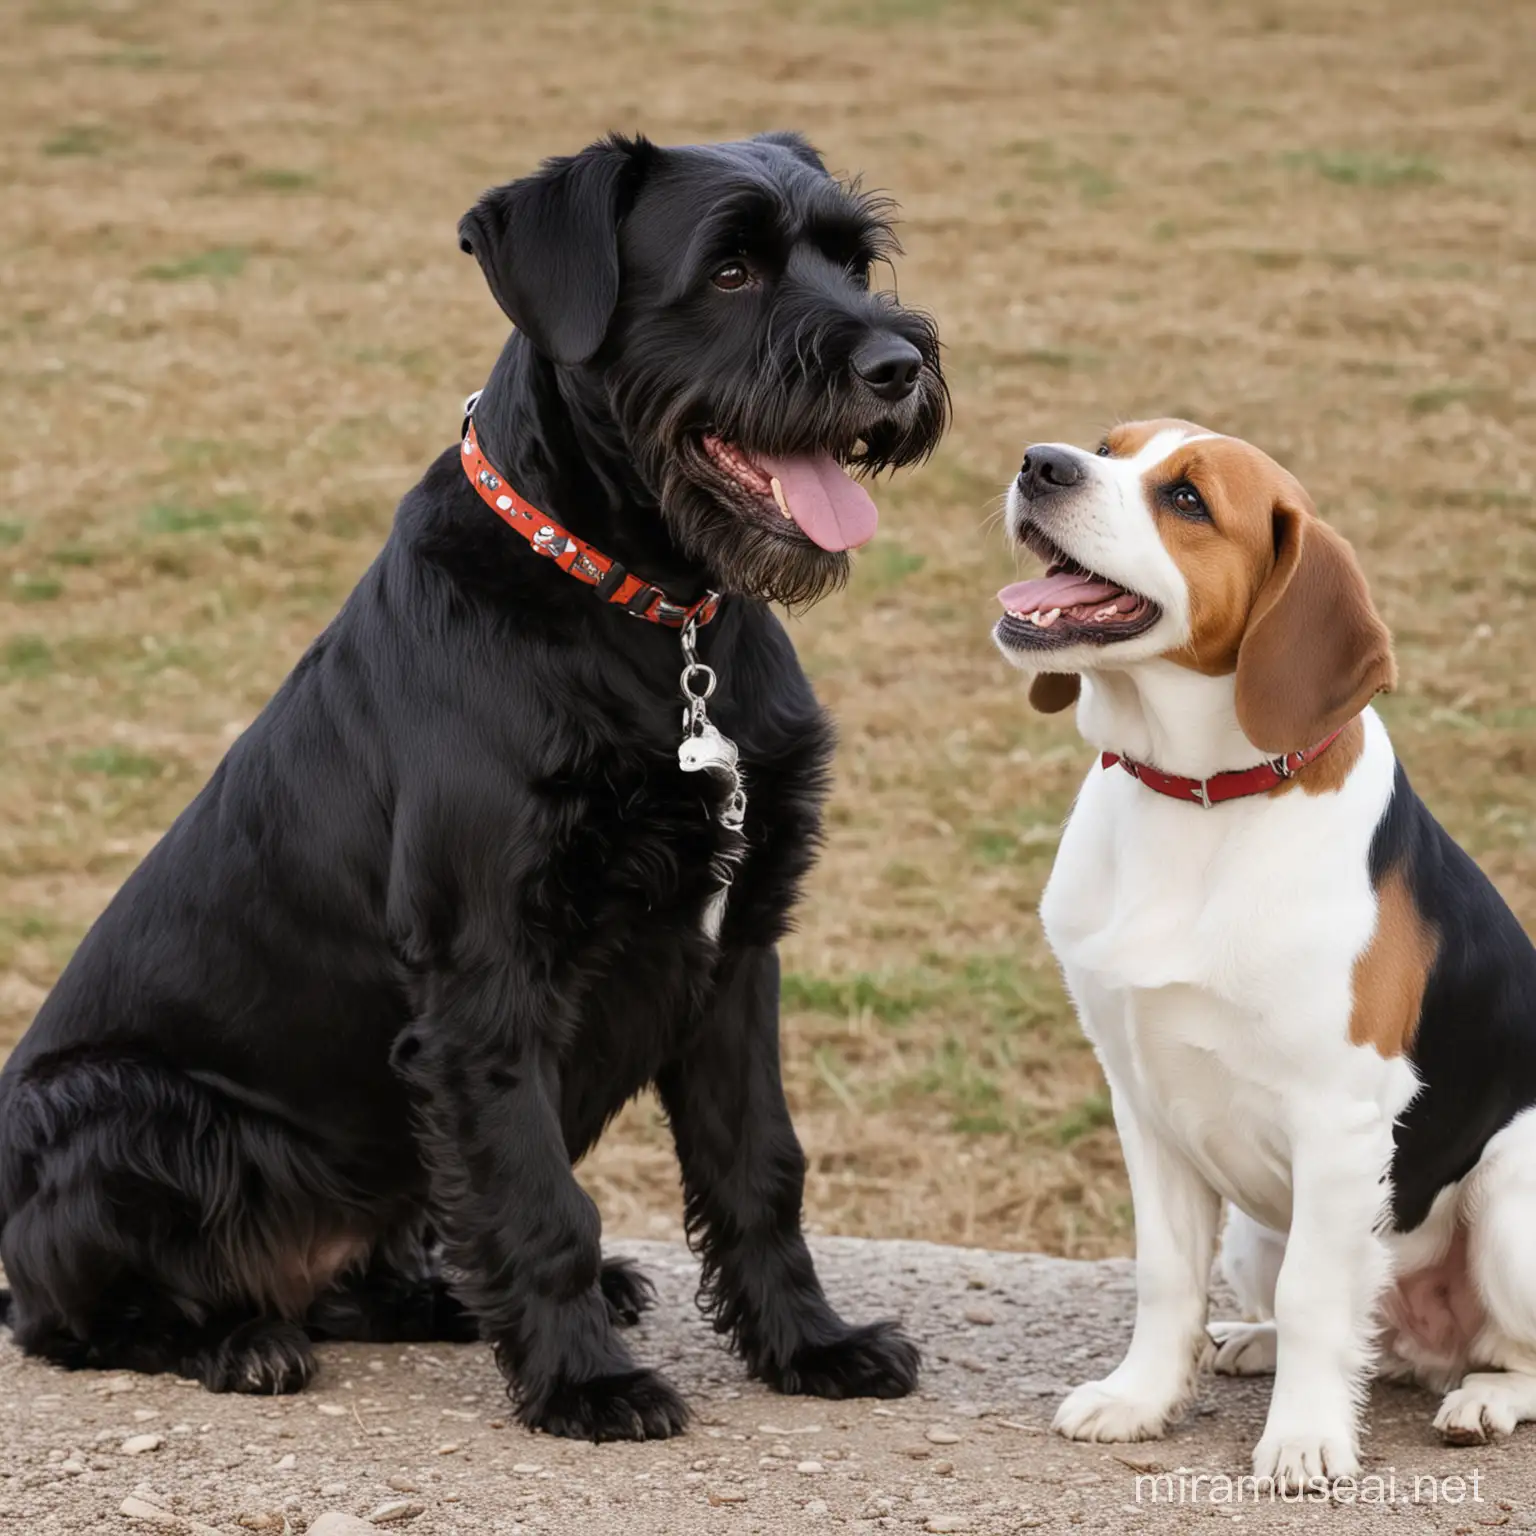 Schnauzer Comedian Shares a Laugh with Beagle Companion